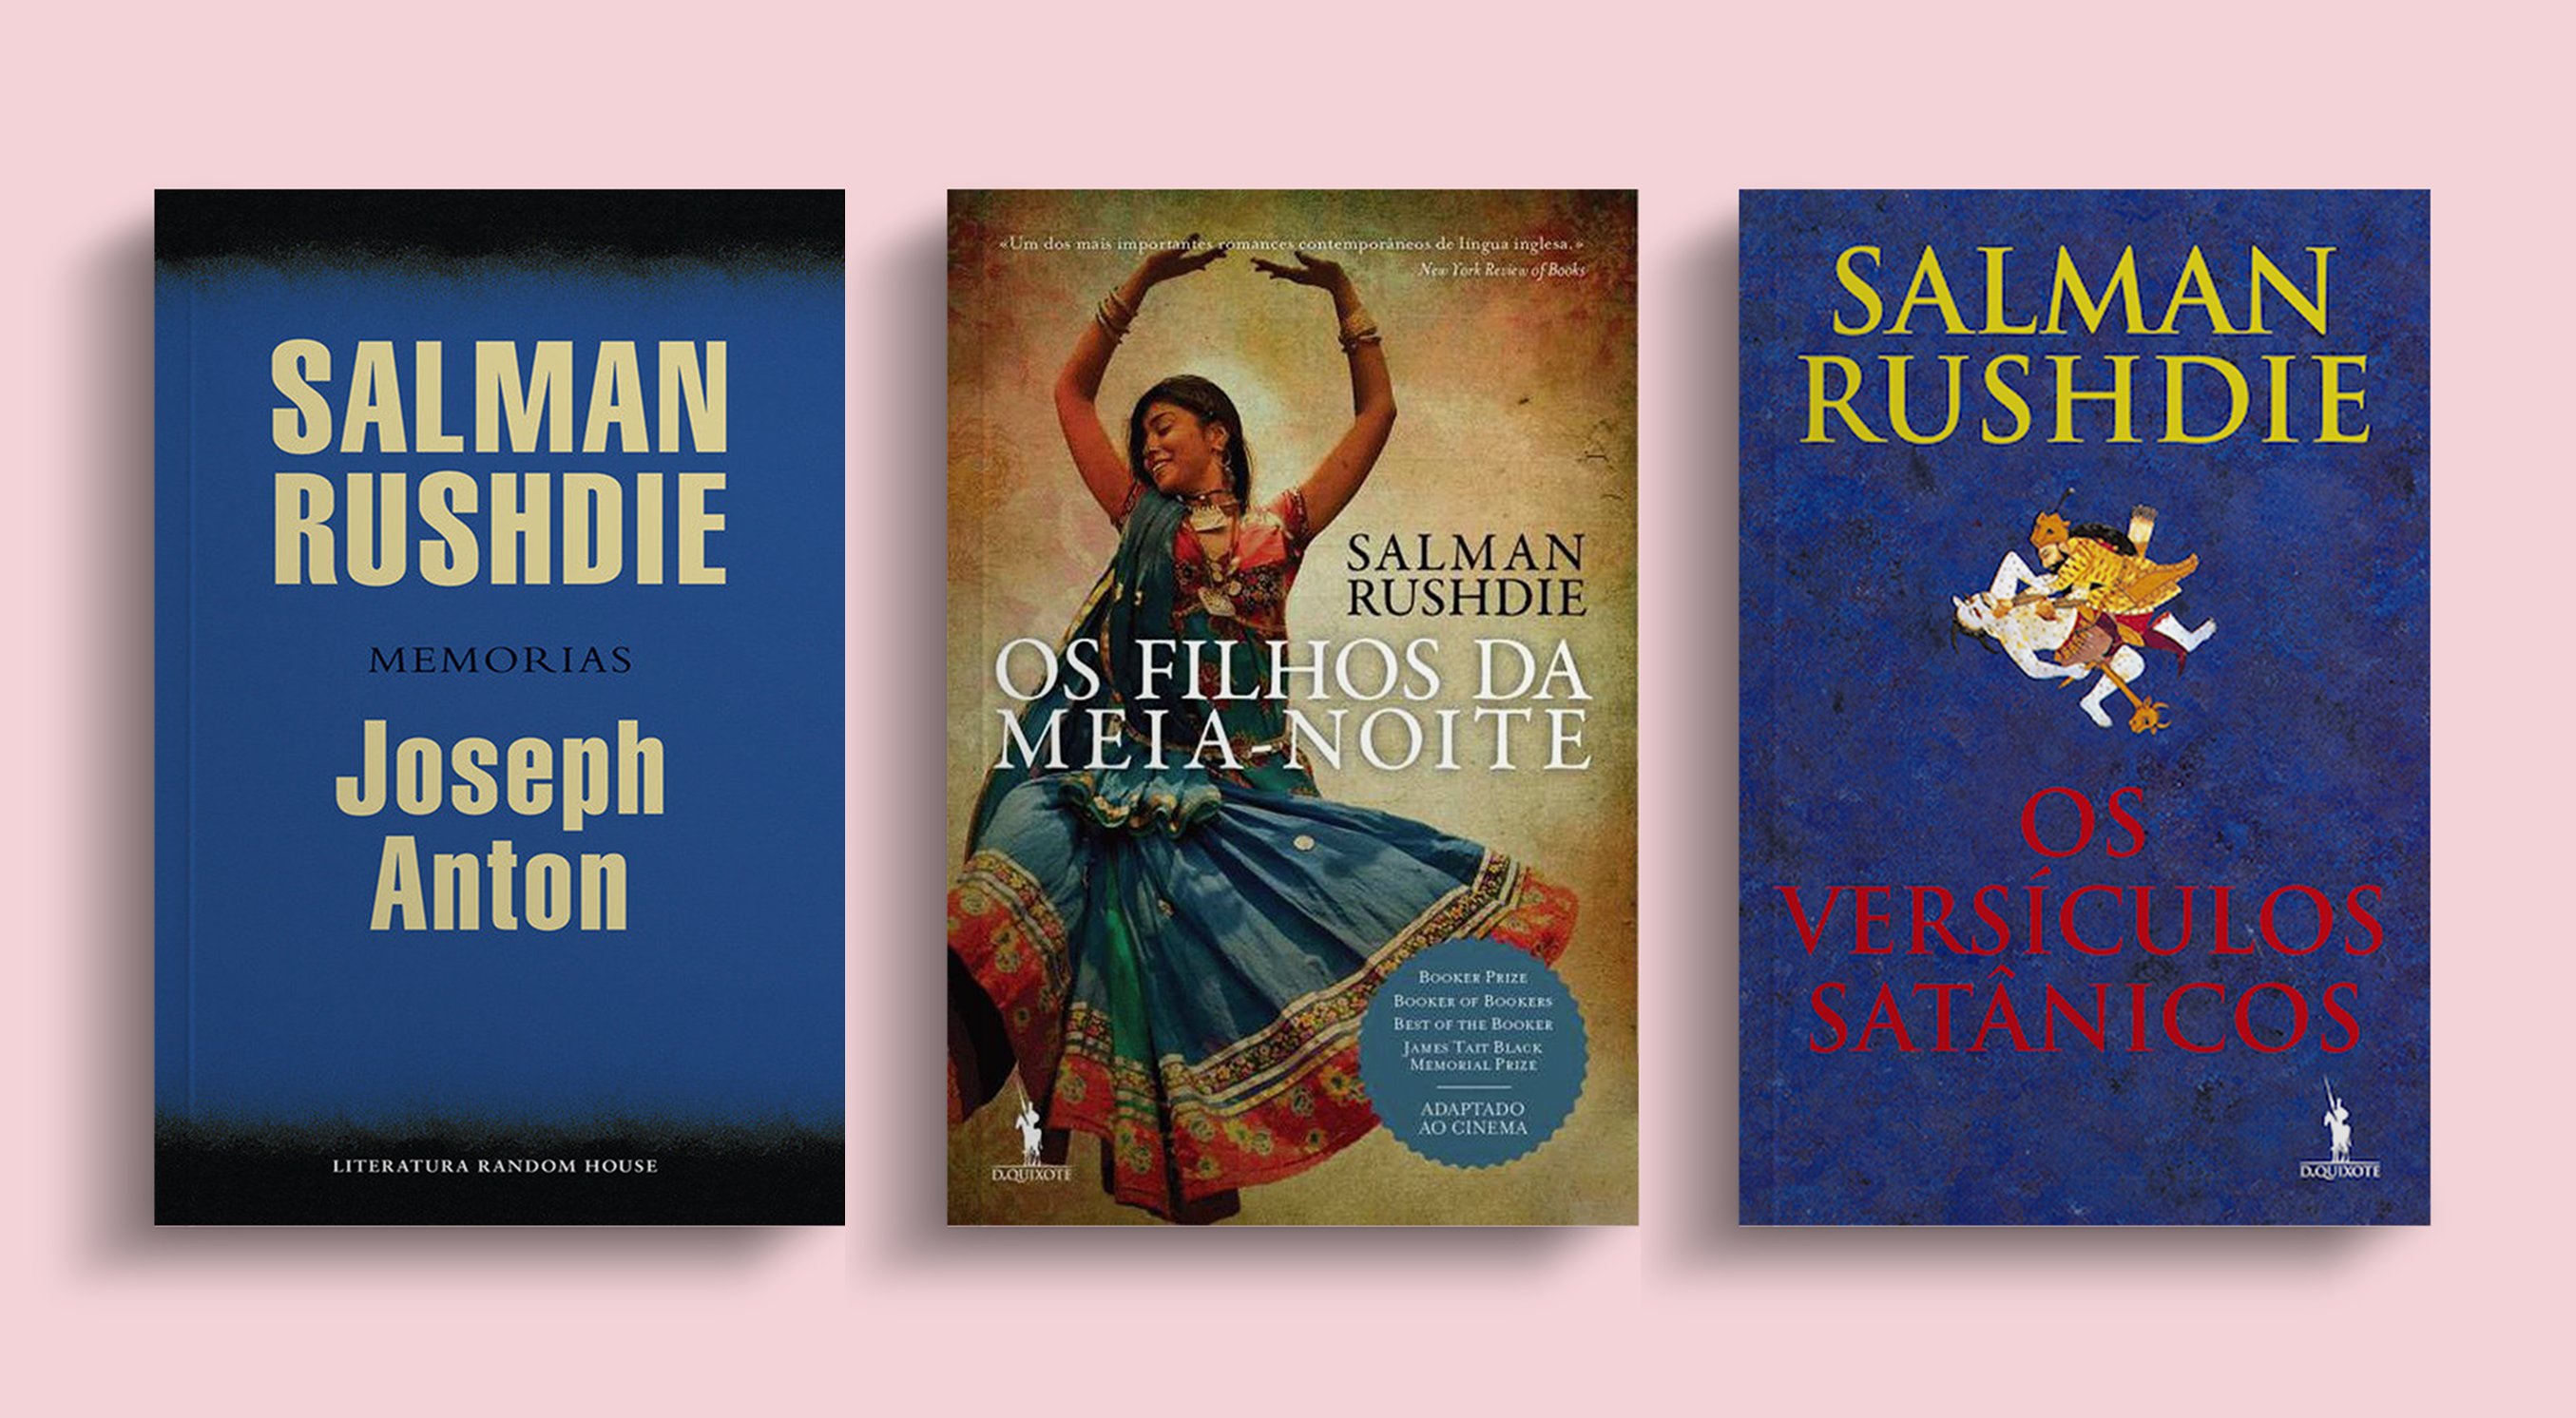 Livraria Lello suggests Salman Rushdie